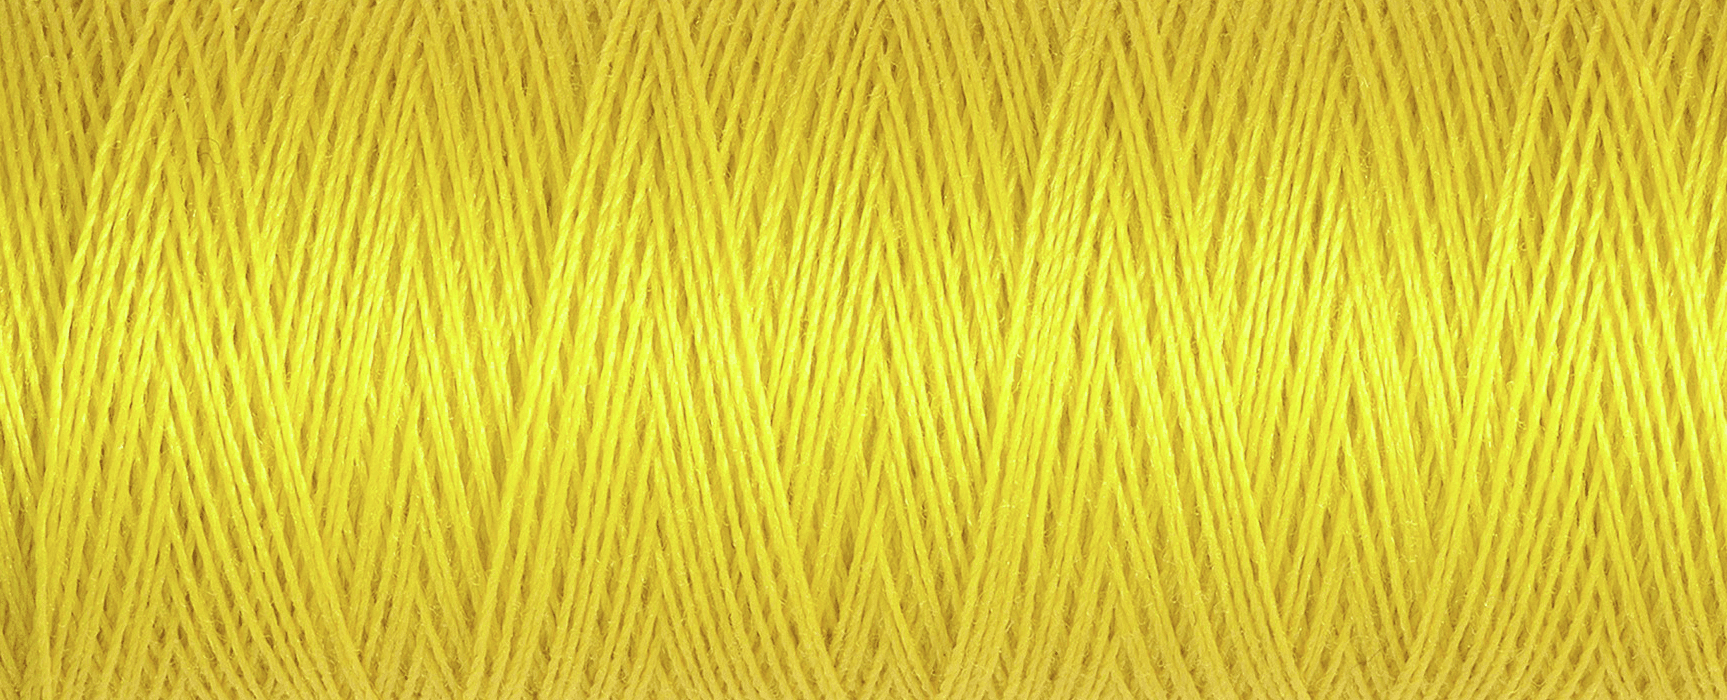 Gutermann Sew-All Thread - 100M (177)-Thread-Jelly Fabrics